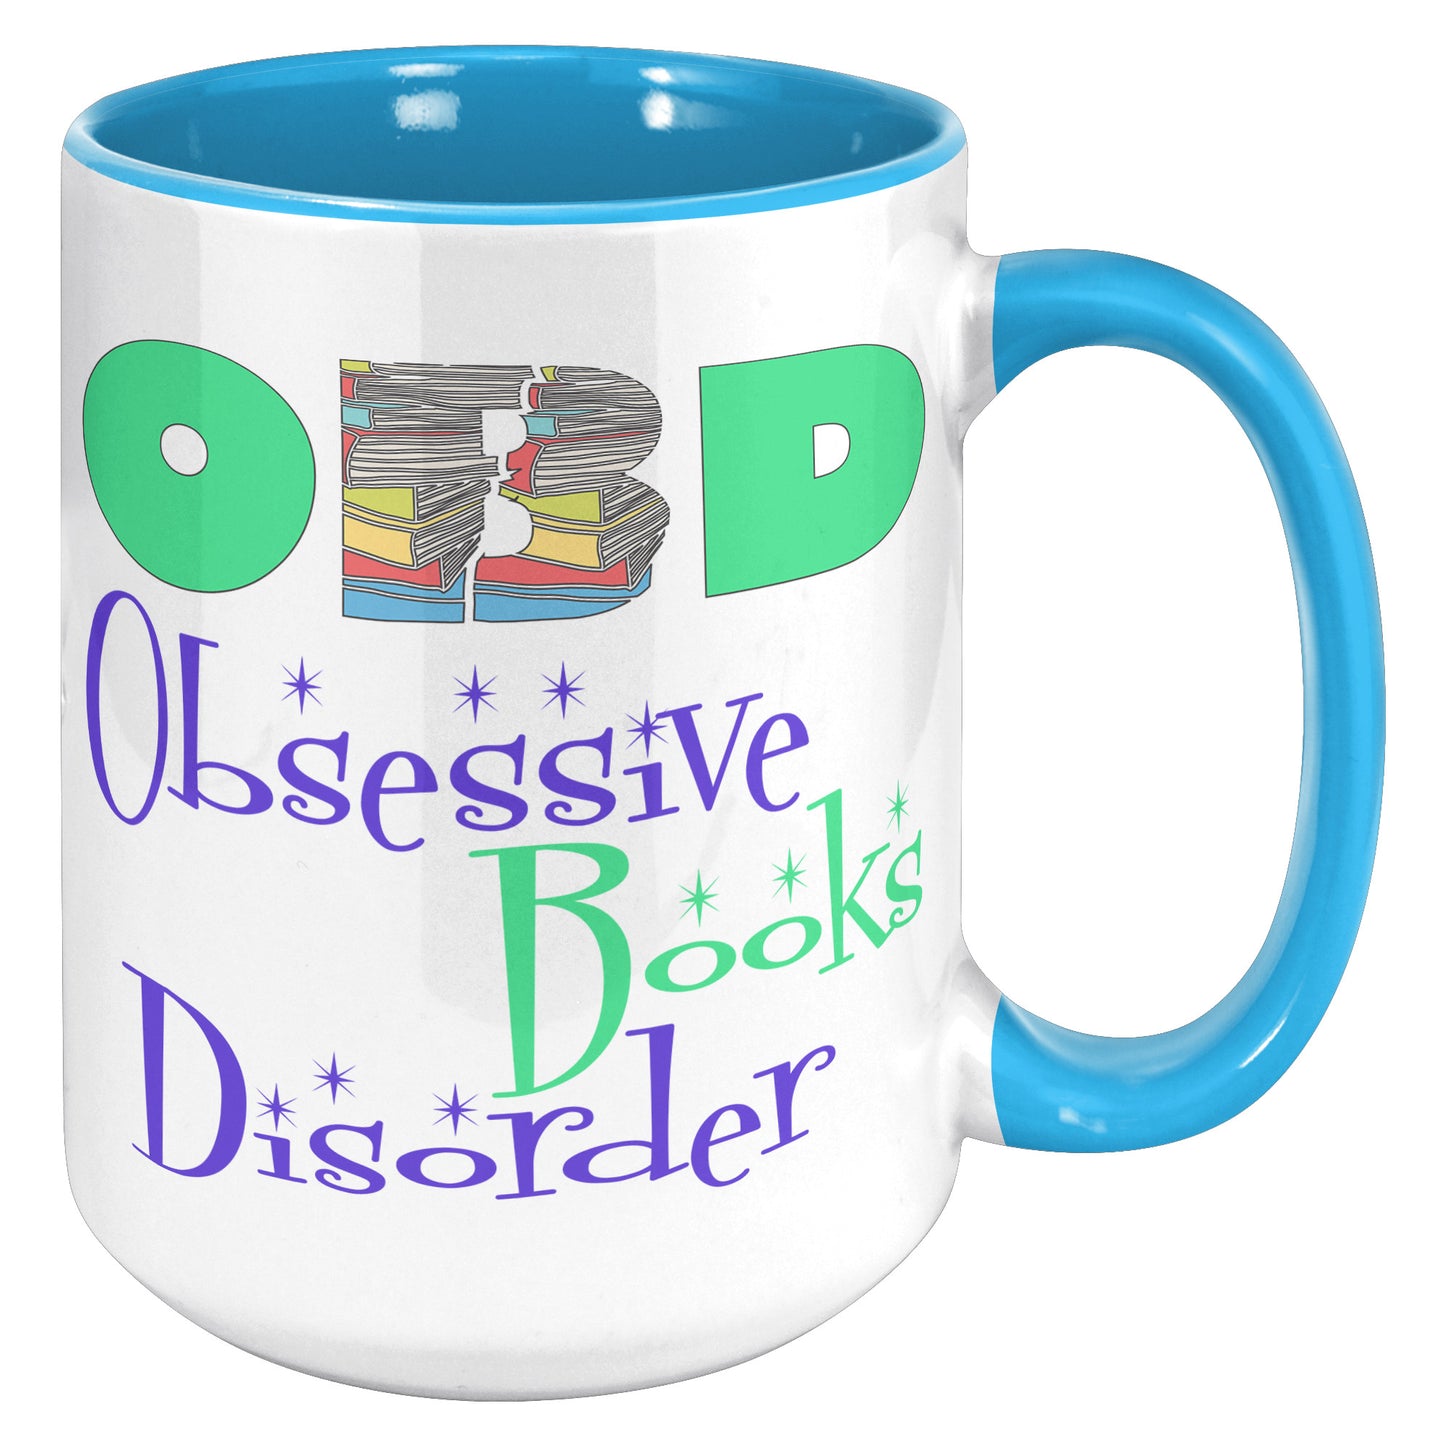 OBD Obsessive Books Disorder | Accent Mug